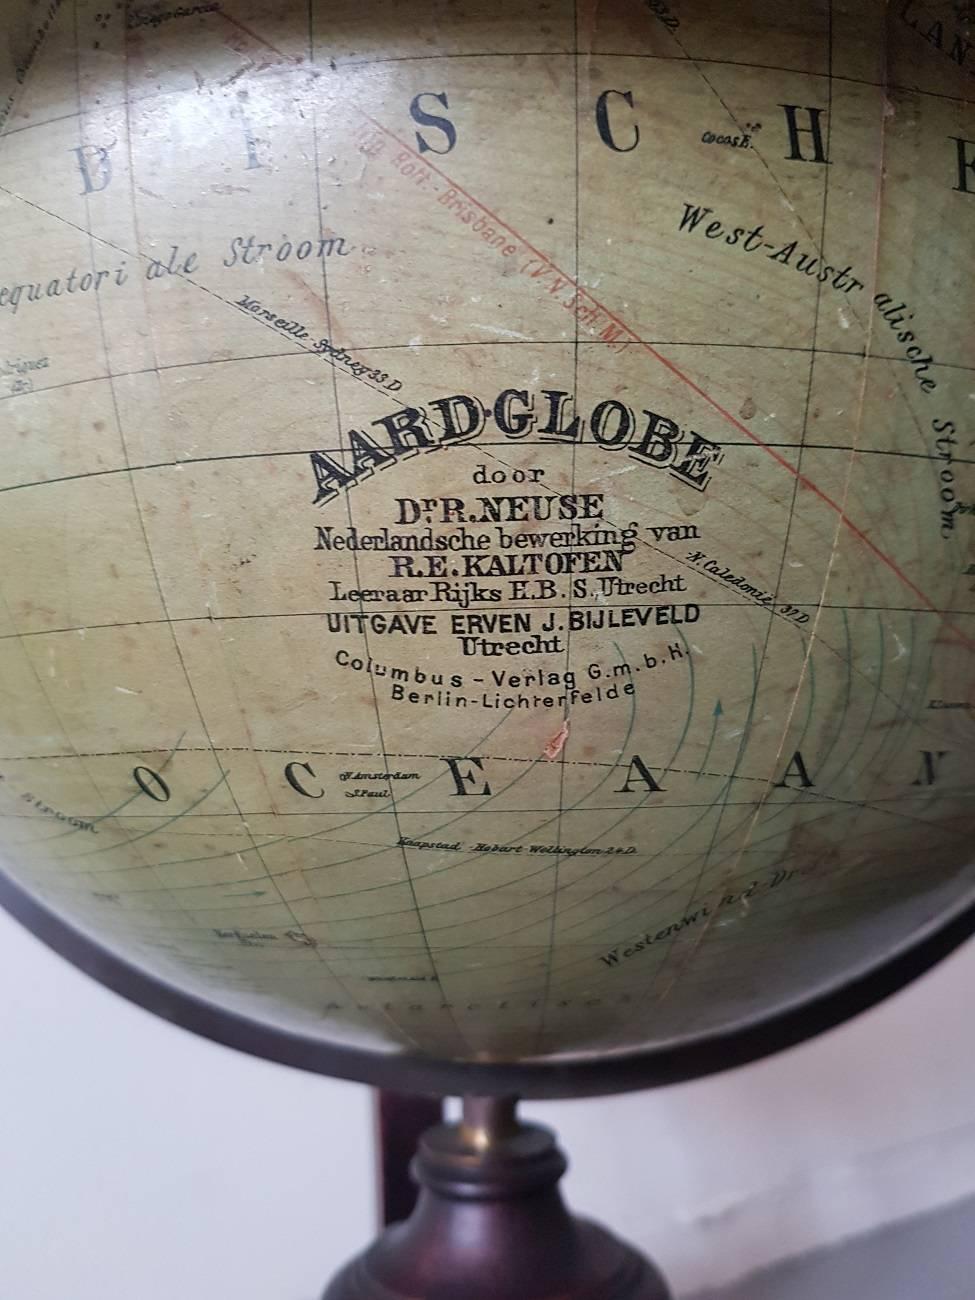 Table terrestrial globe by Dr. R. Neuse Dutch editions of R.E. Kaltofen Teacher Rijks H.B.S. Utrecht publication Erven J. Bijleveld Utrecht Columbus report G.m.b.h. Berlin-Lichterfelde and has a compass in the foot and along the edge are the zodiac